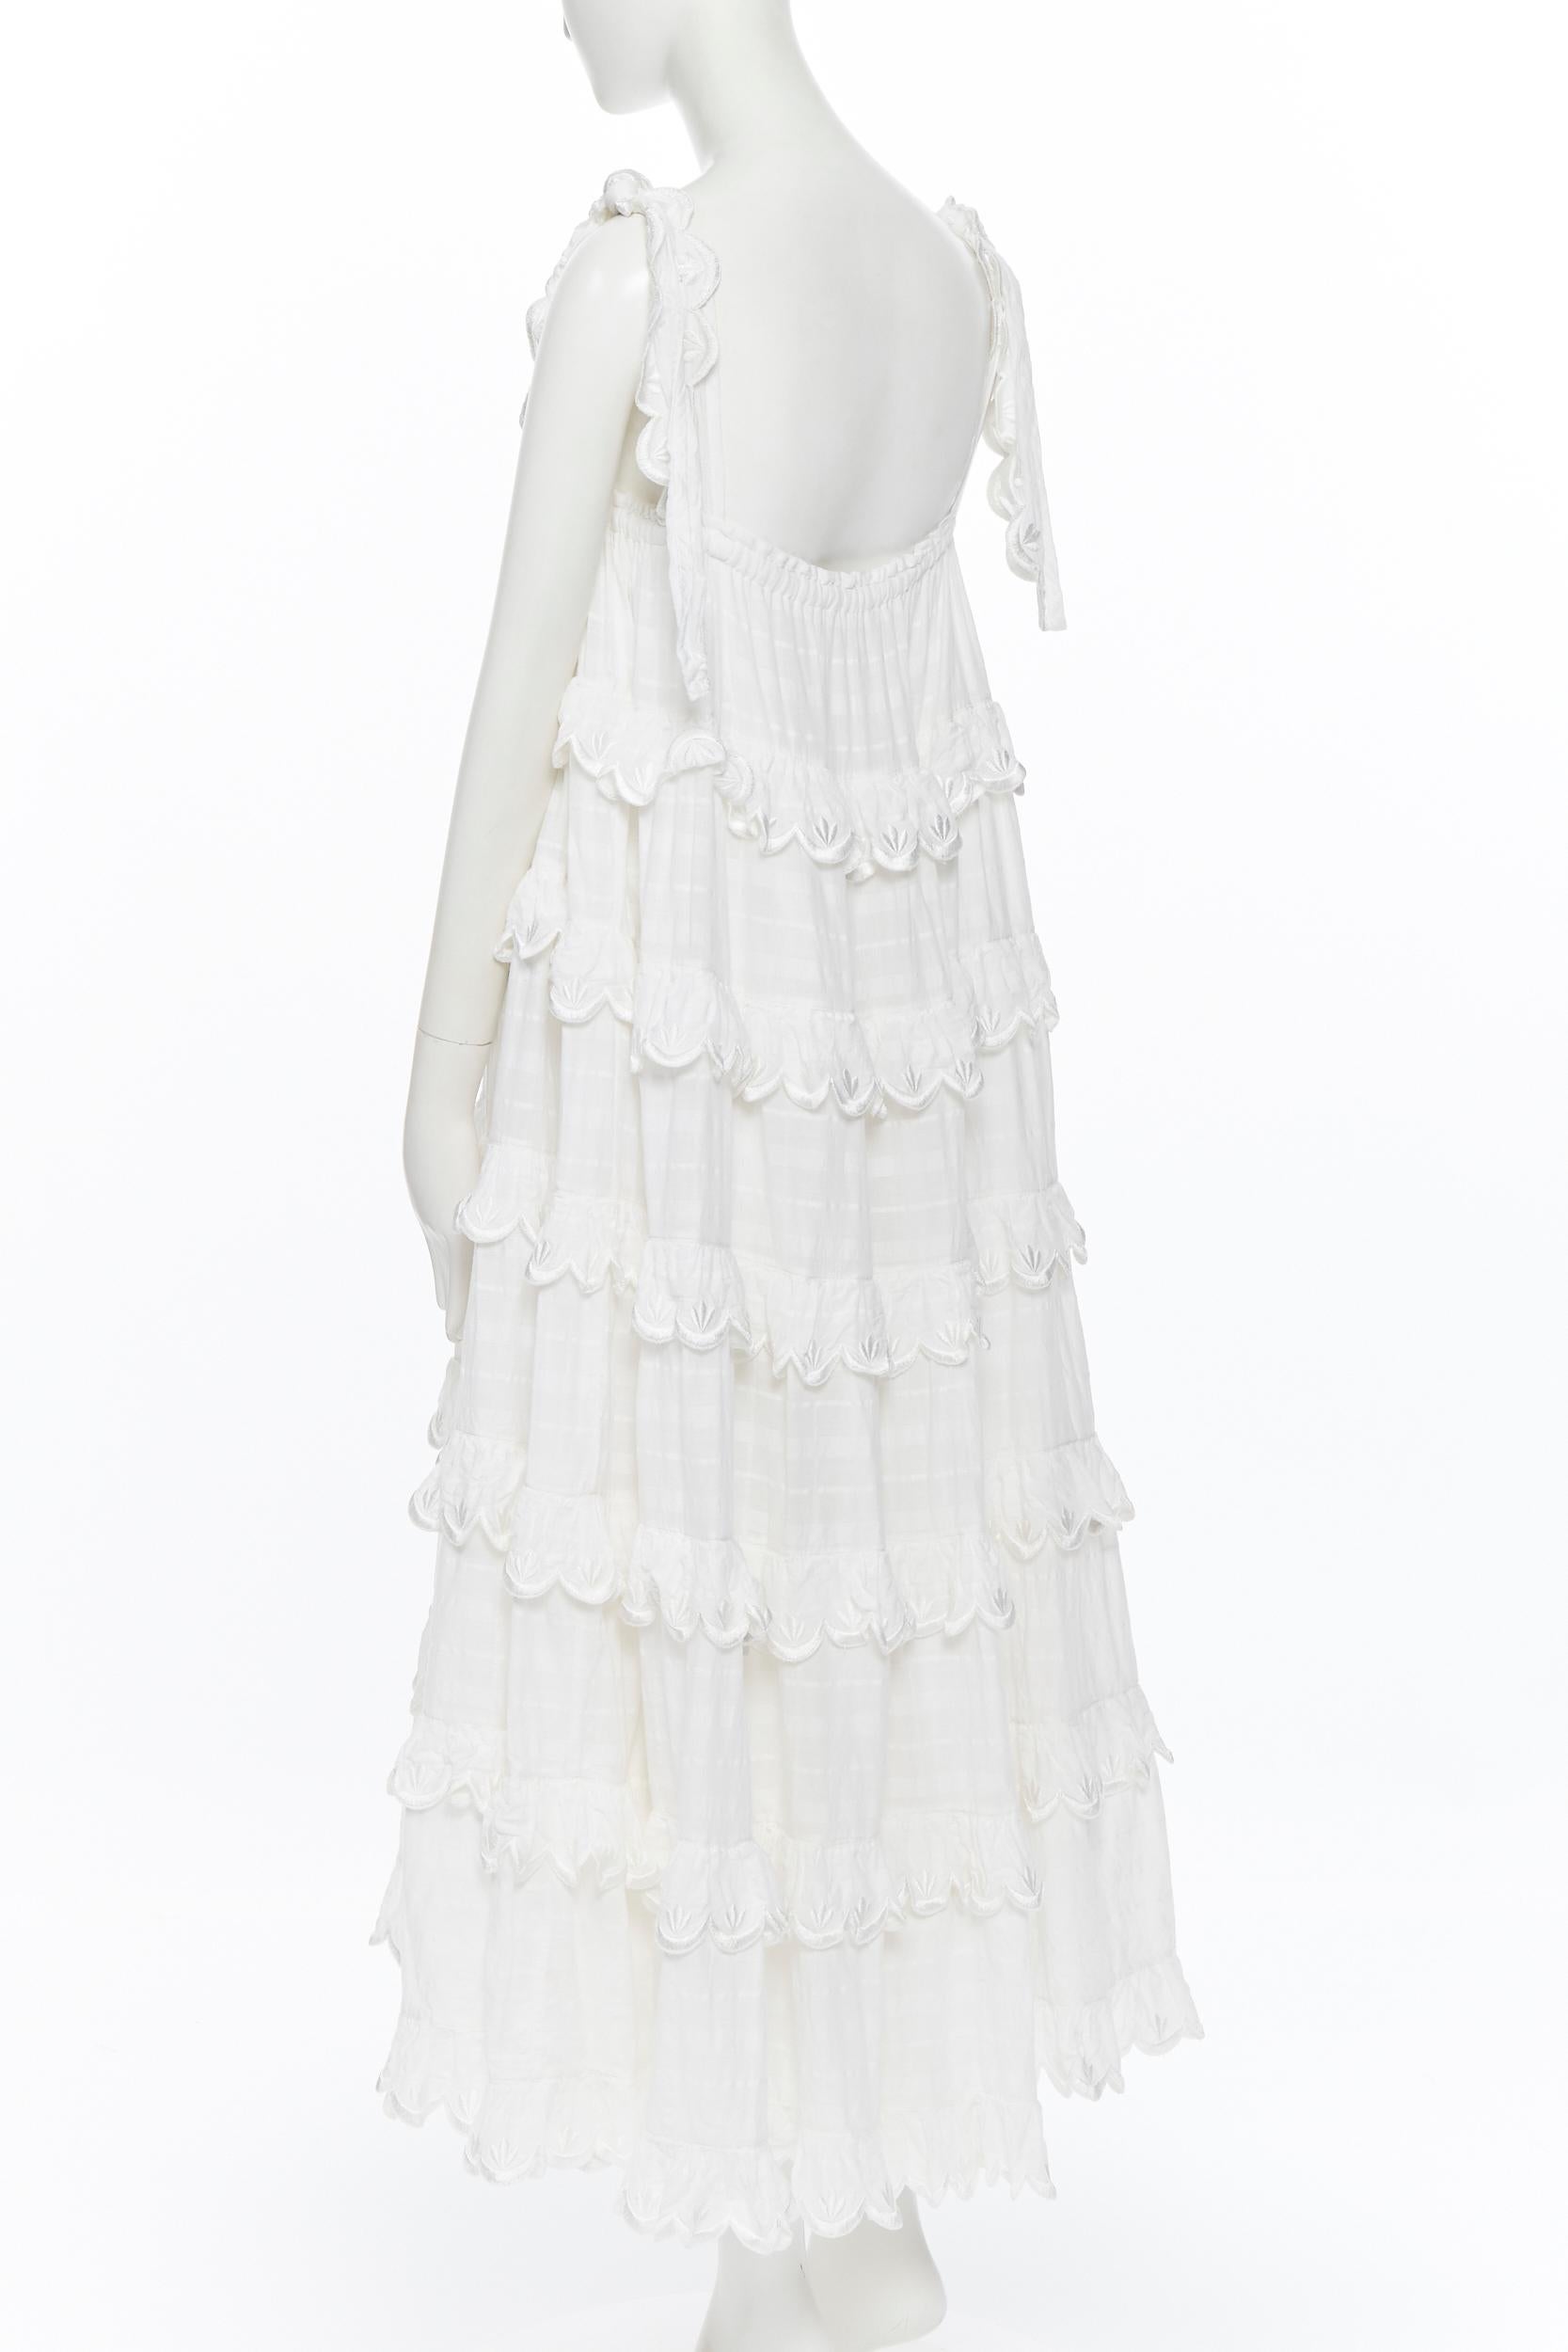 Women's INNIKA CHOO white cotton embroidered scallop petal tiered bohemian tent dress